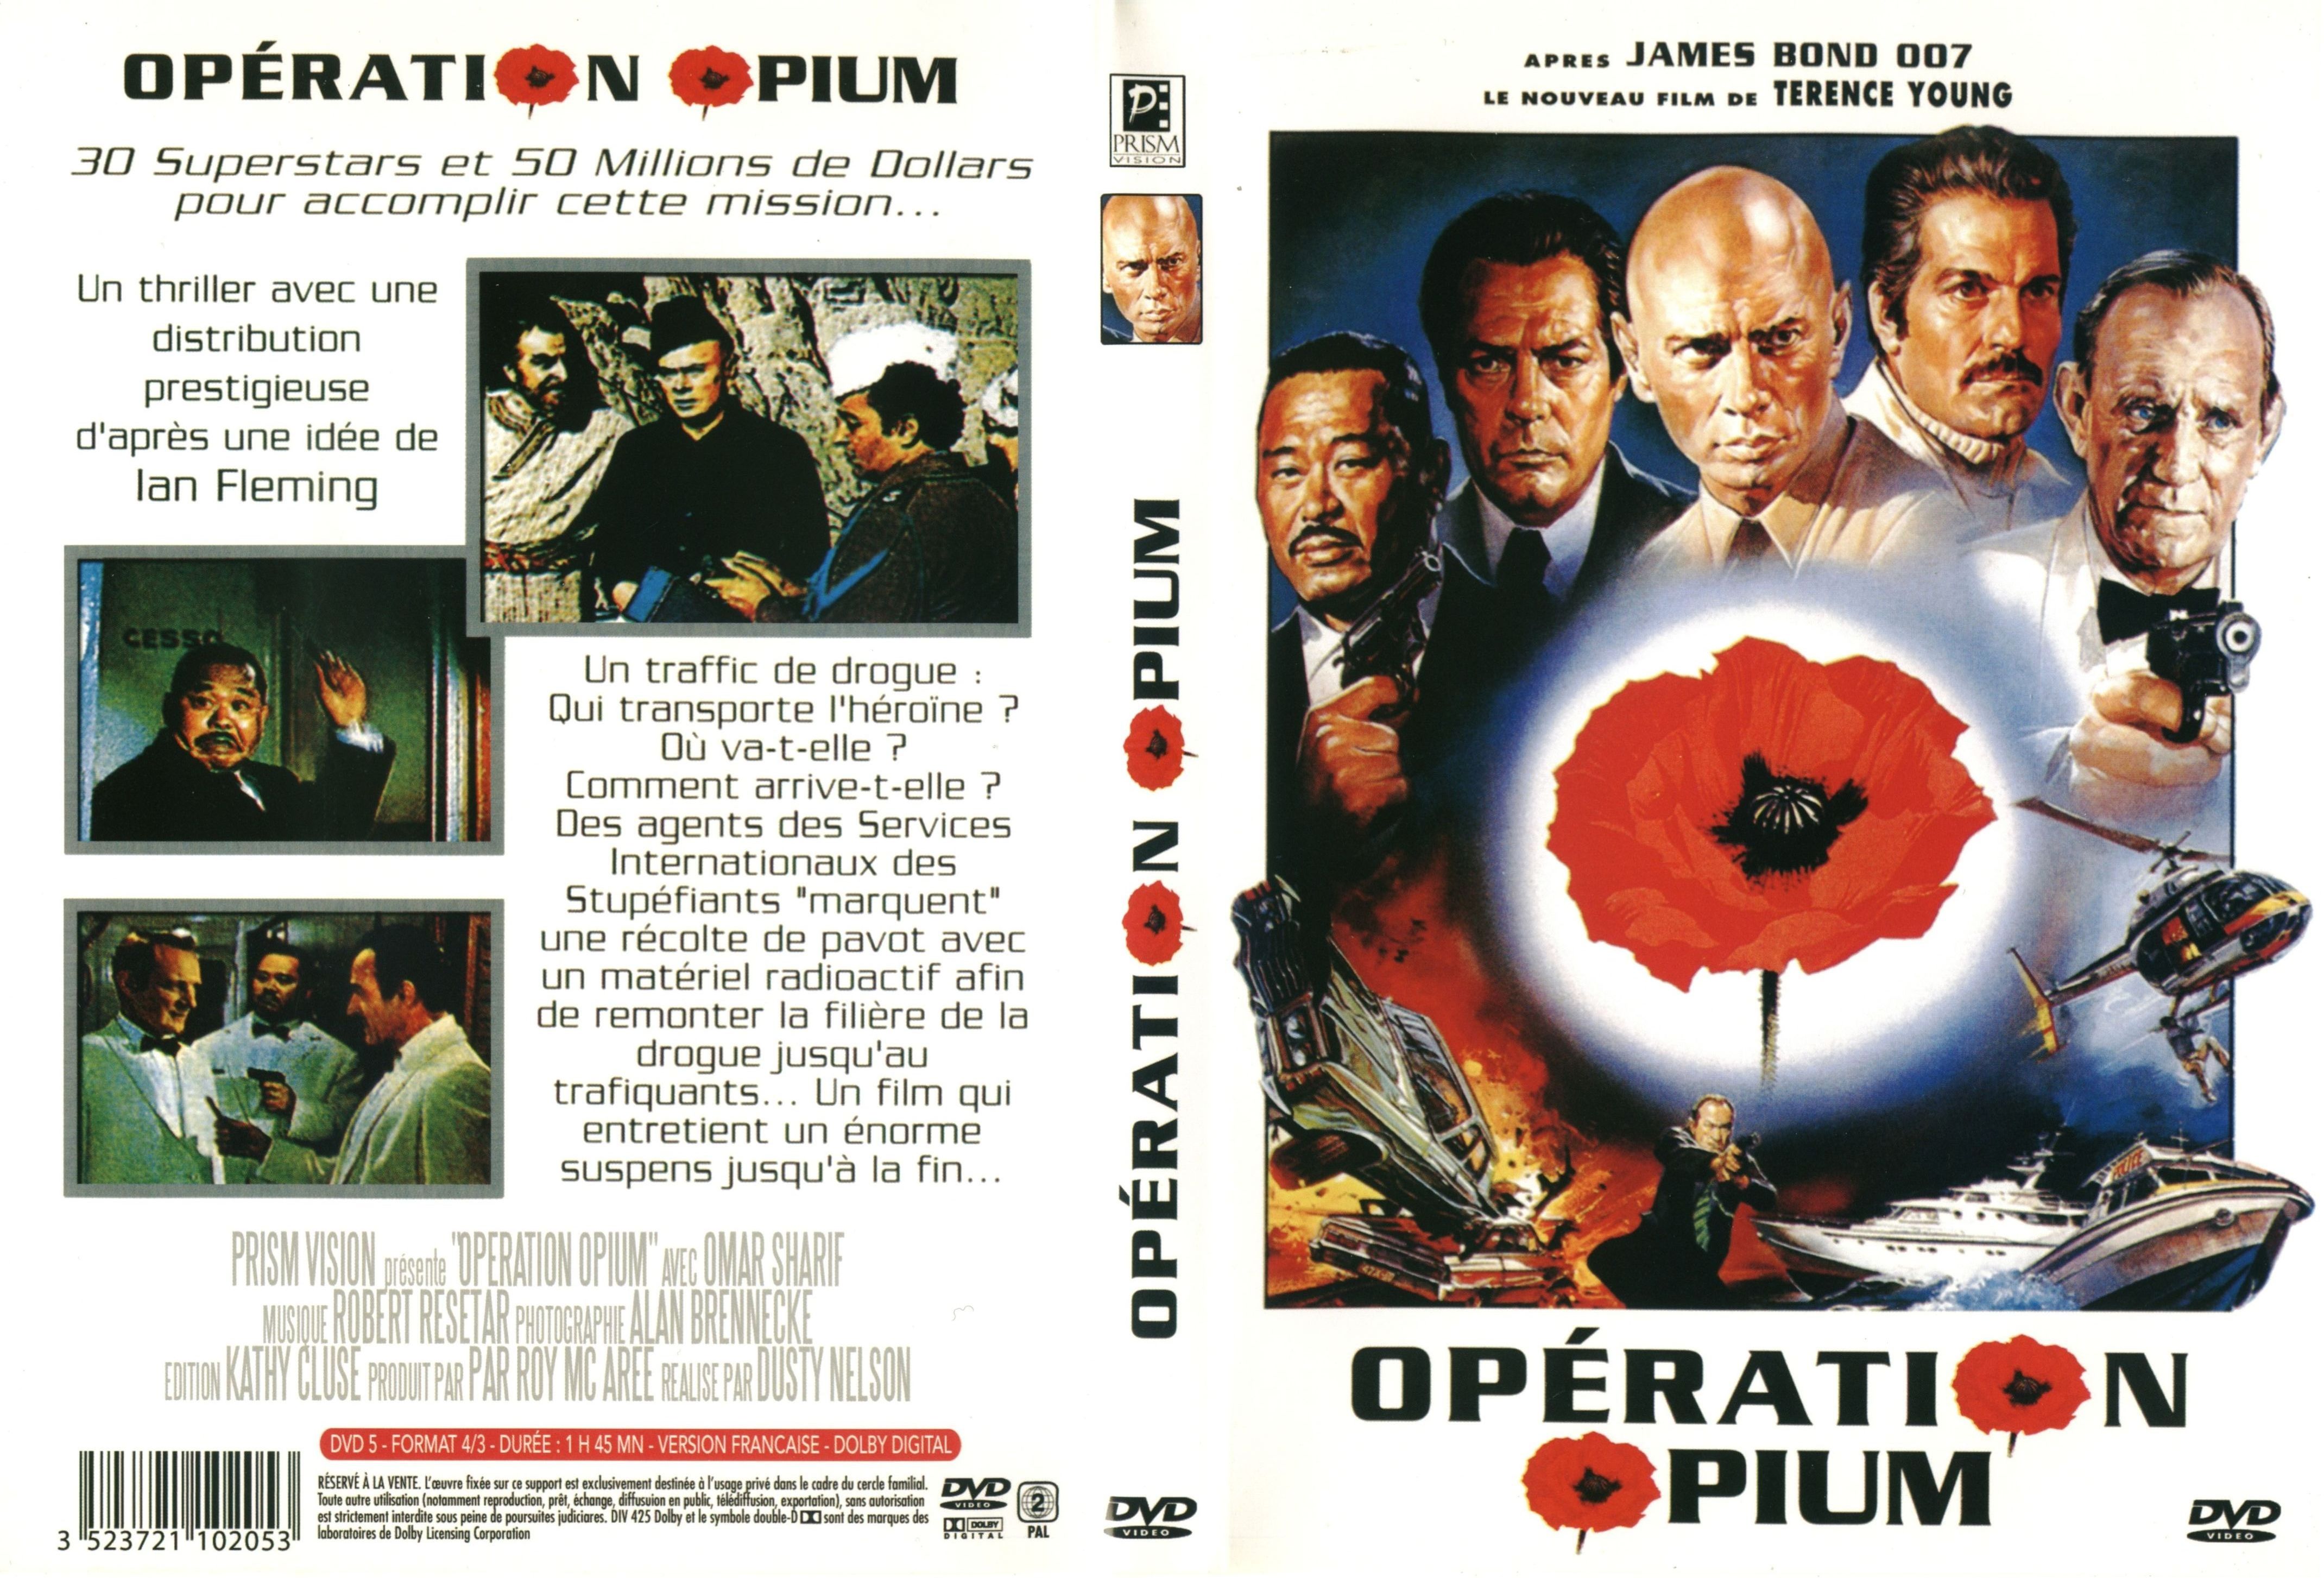 Jaquette DVD Opration opium